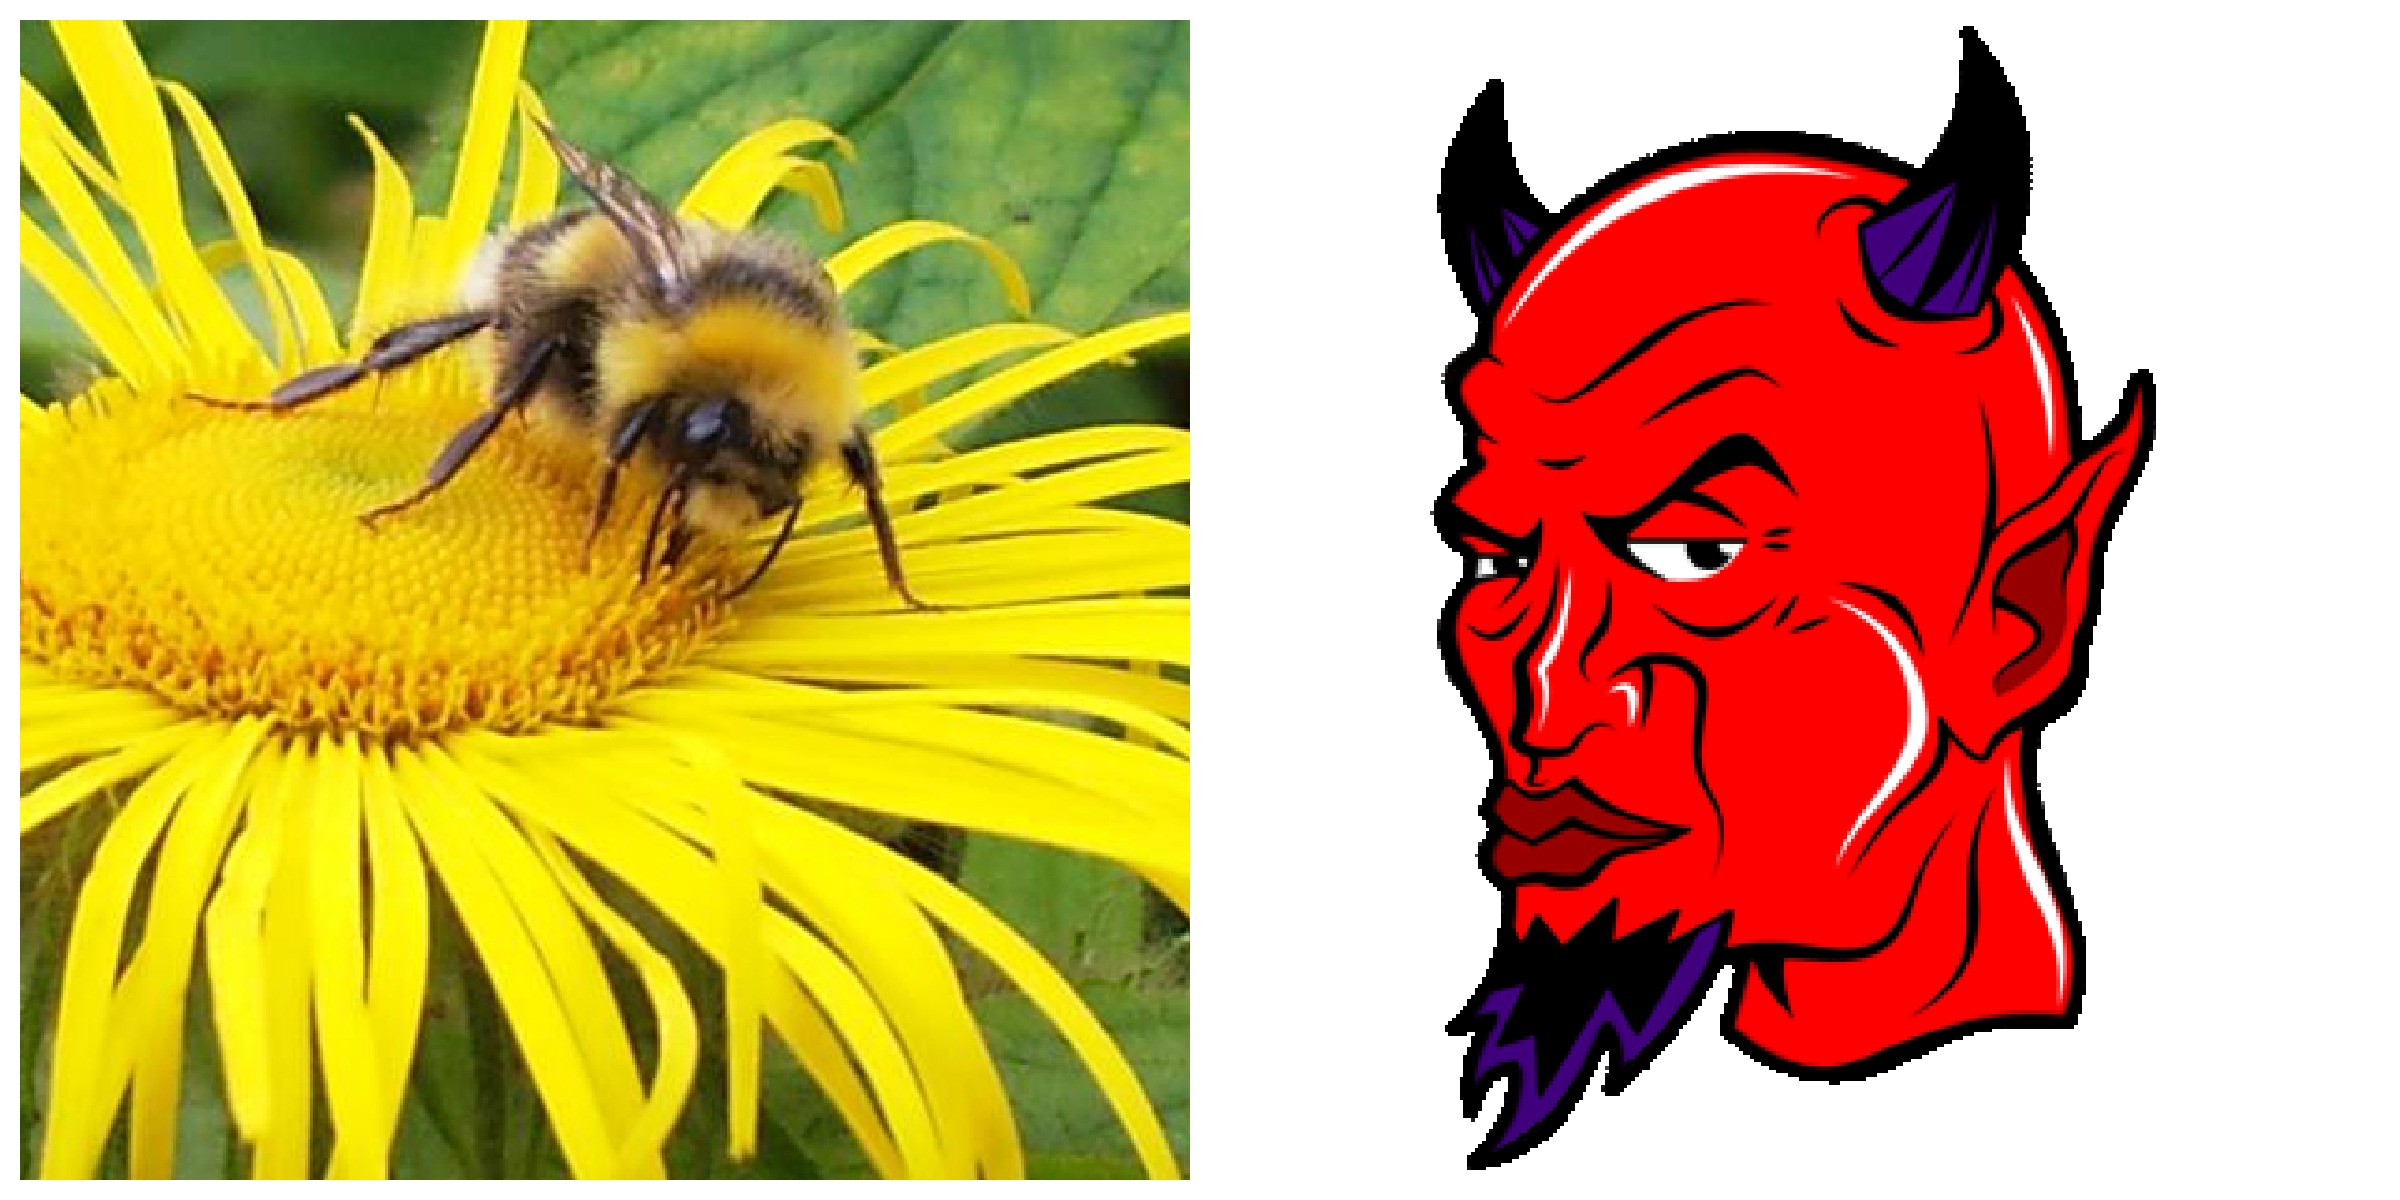 Pollen is the Devil